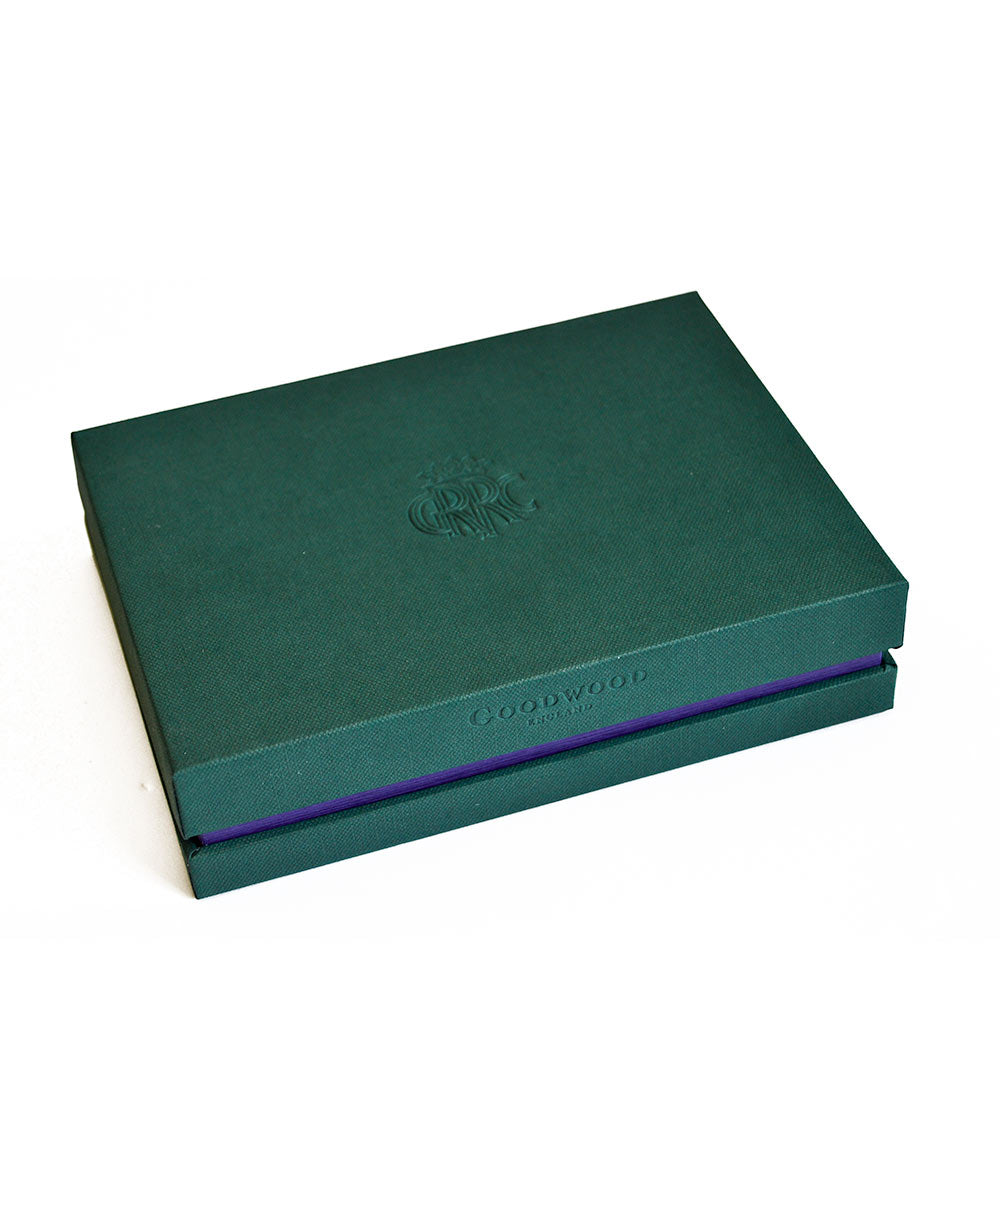 GRRC Leather Luggage Tag in Green & Purple Presentation Box